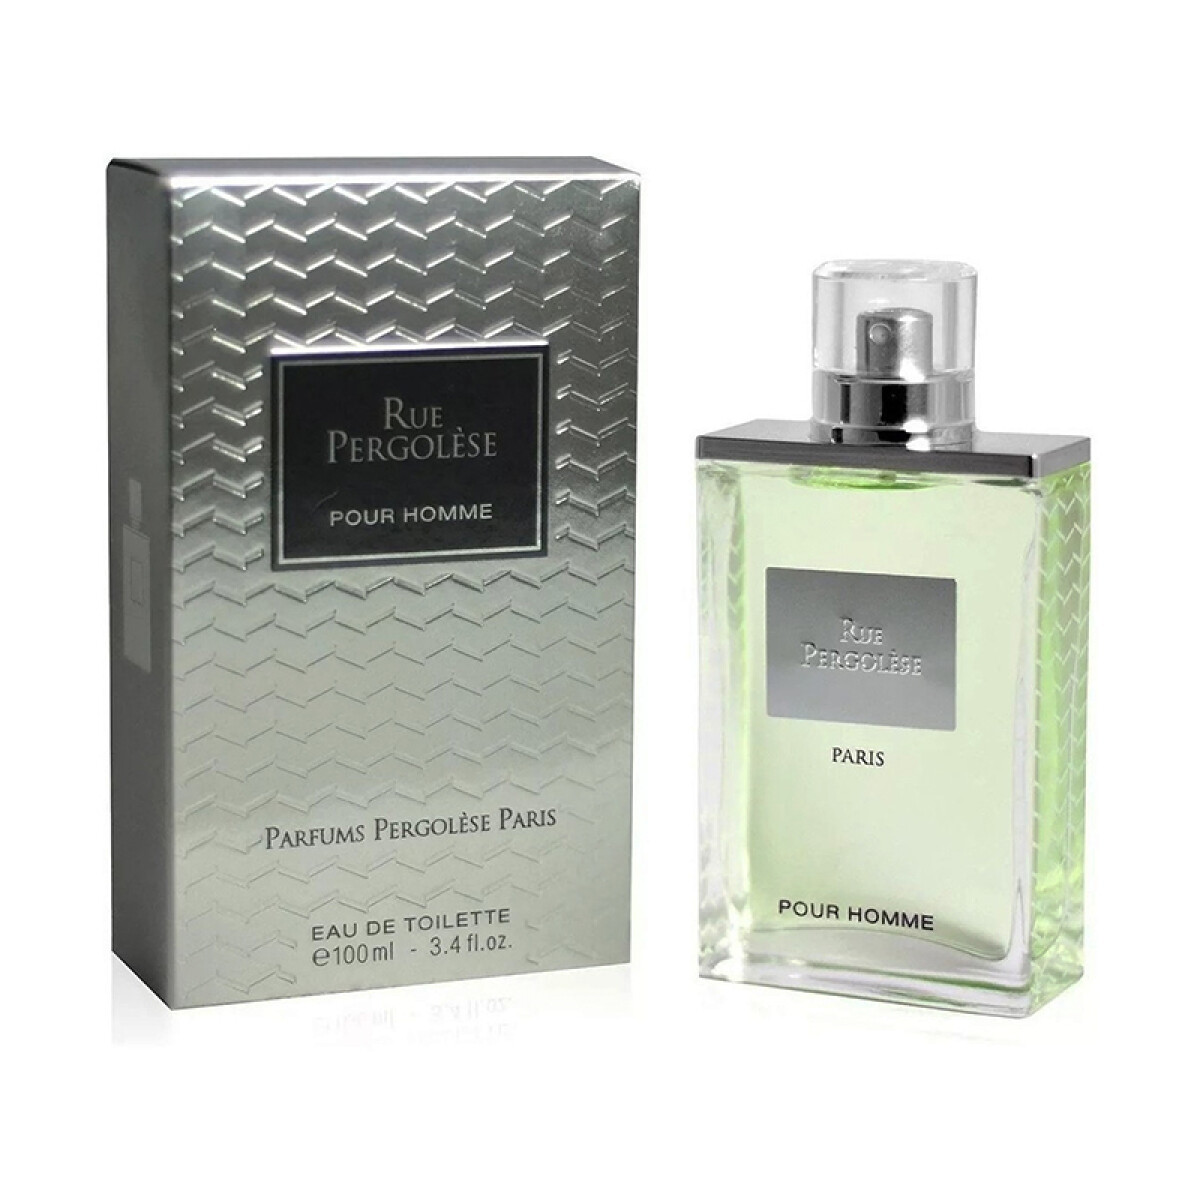 Perfume Rue Pergolese Pour Homme 100 ml 